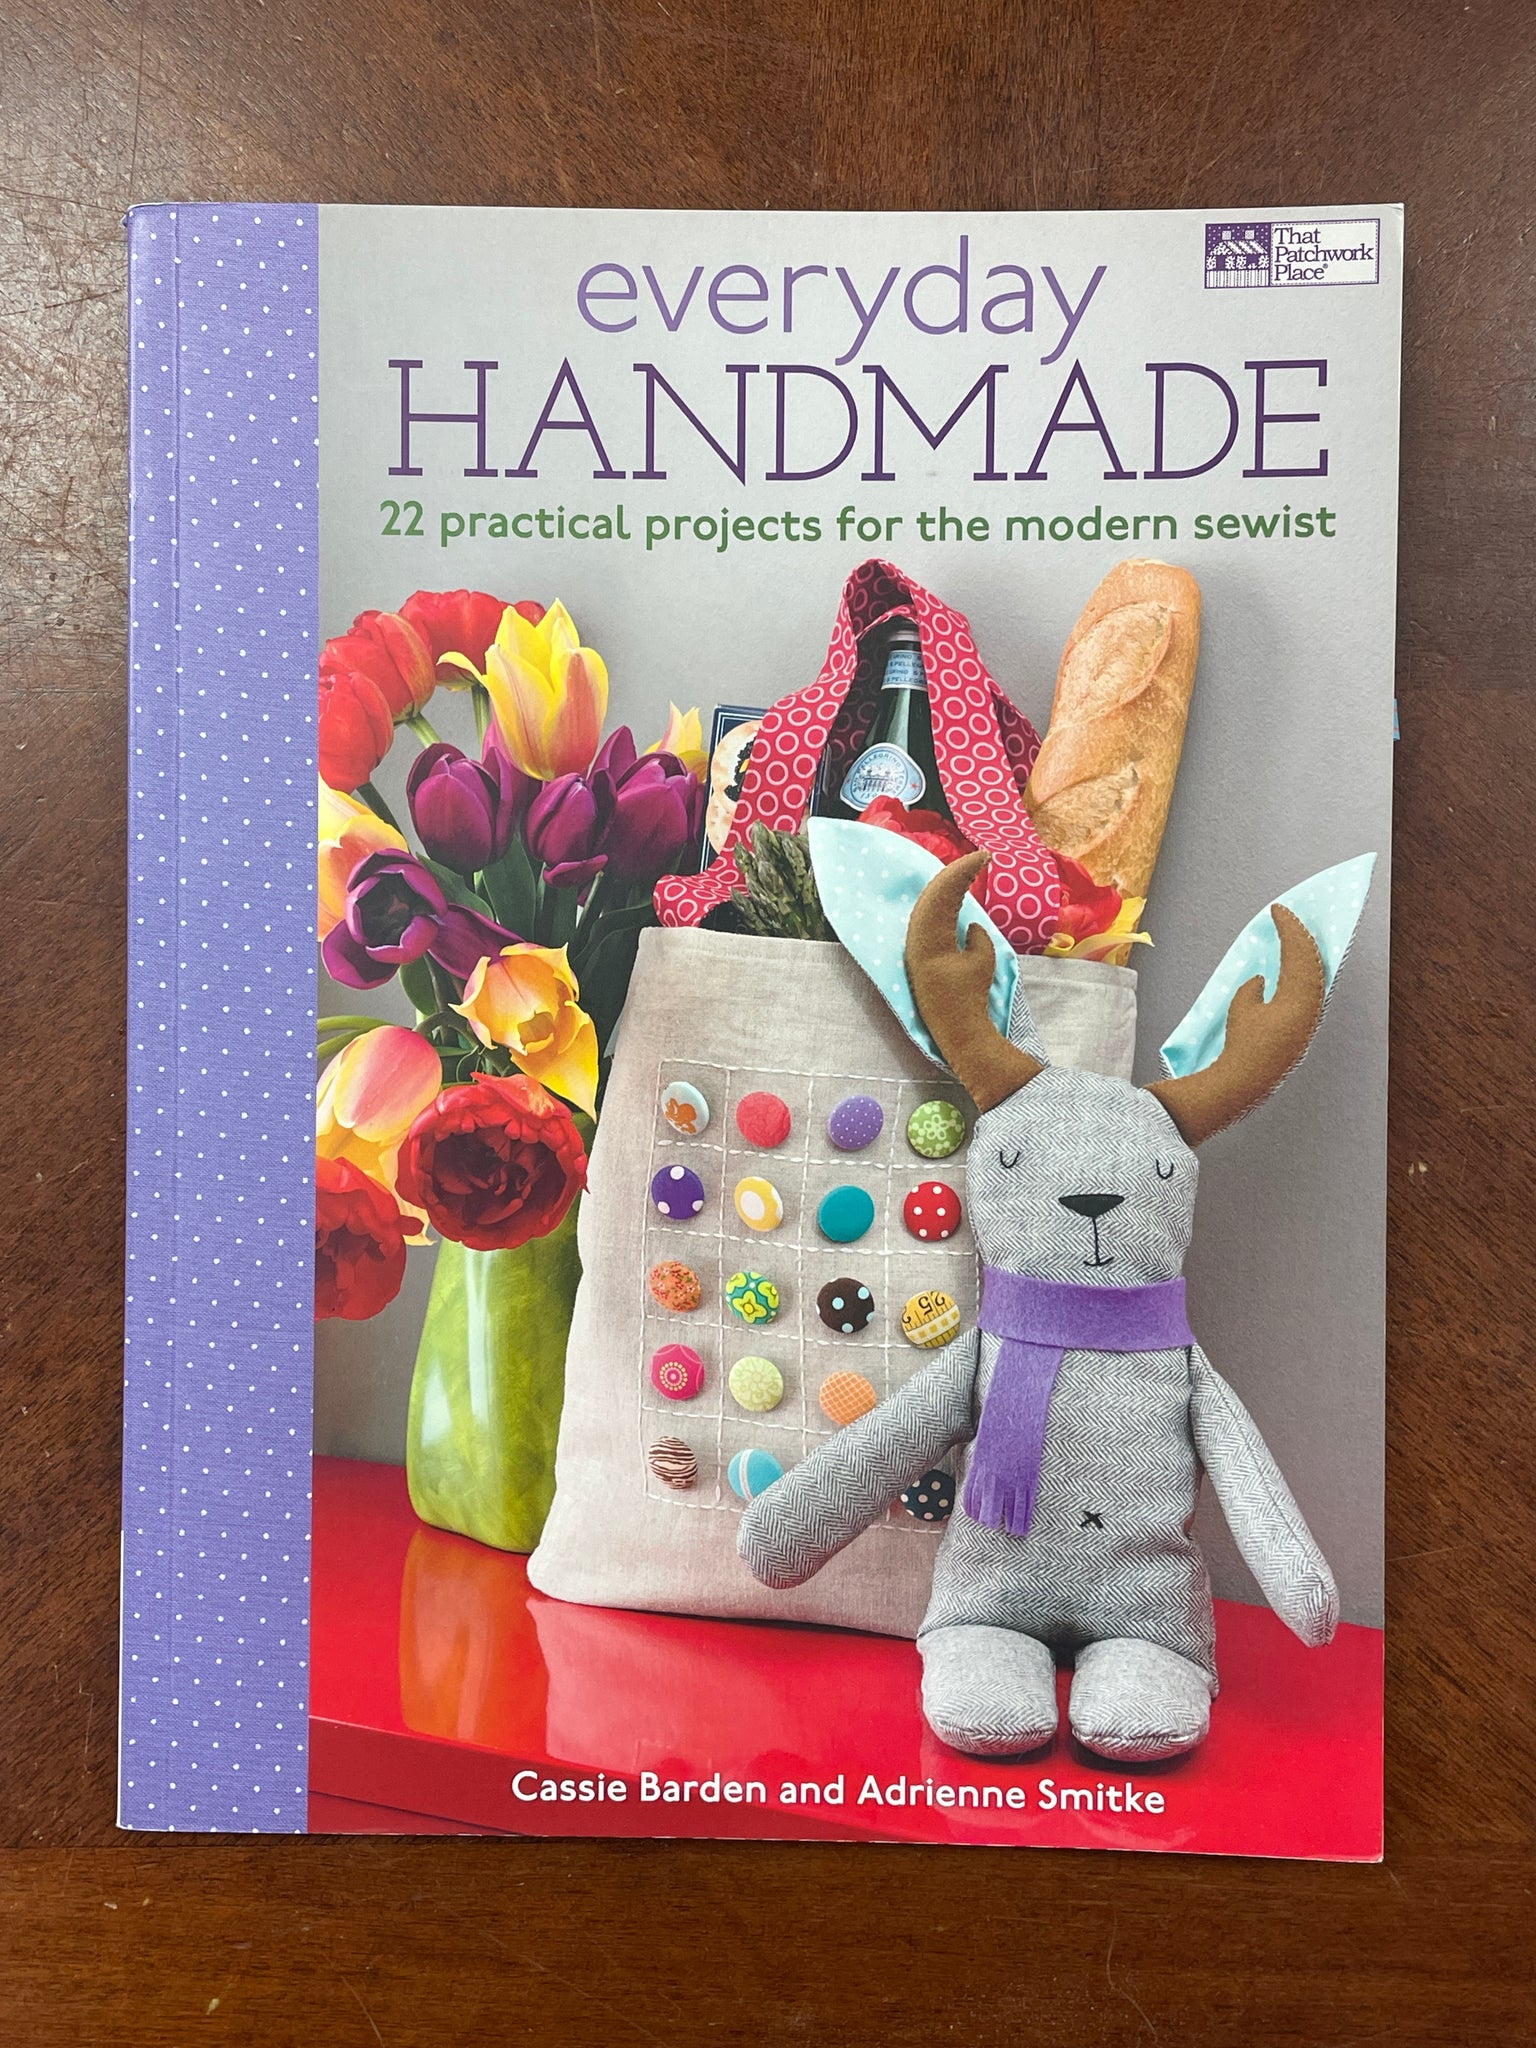 2011 Sewing Book - "Everyday Handmade"